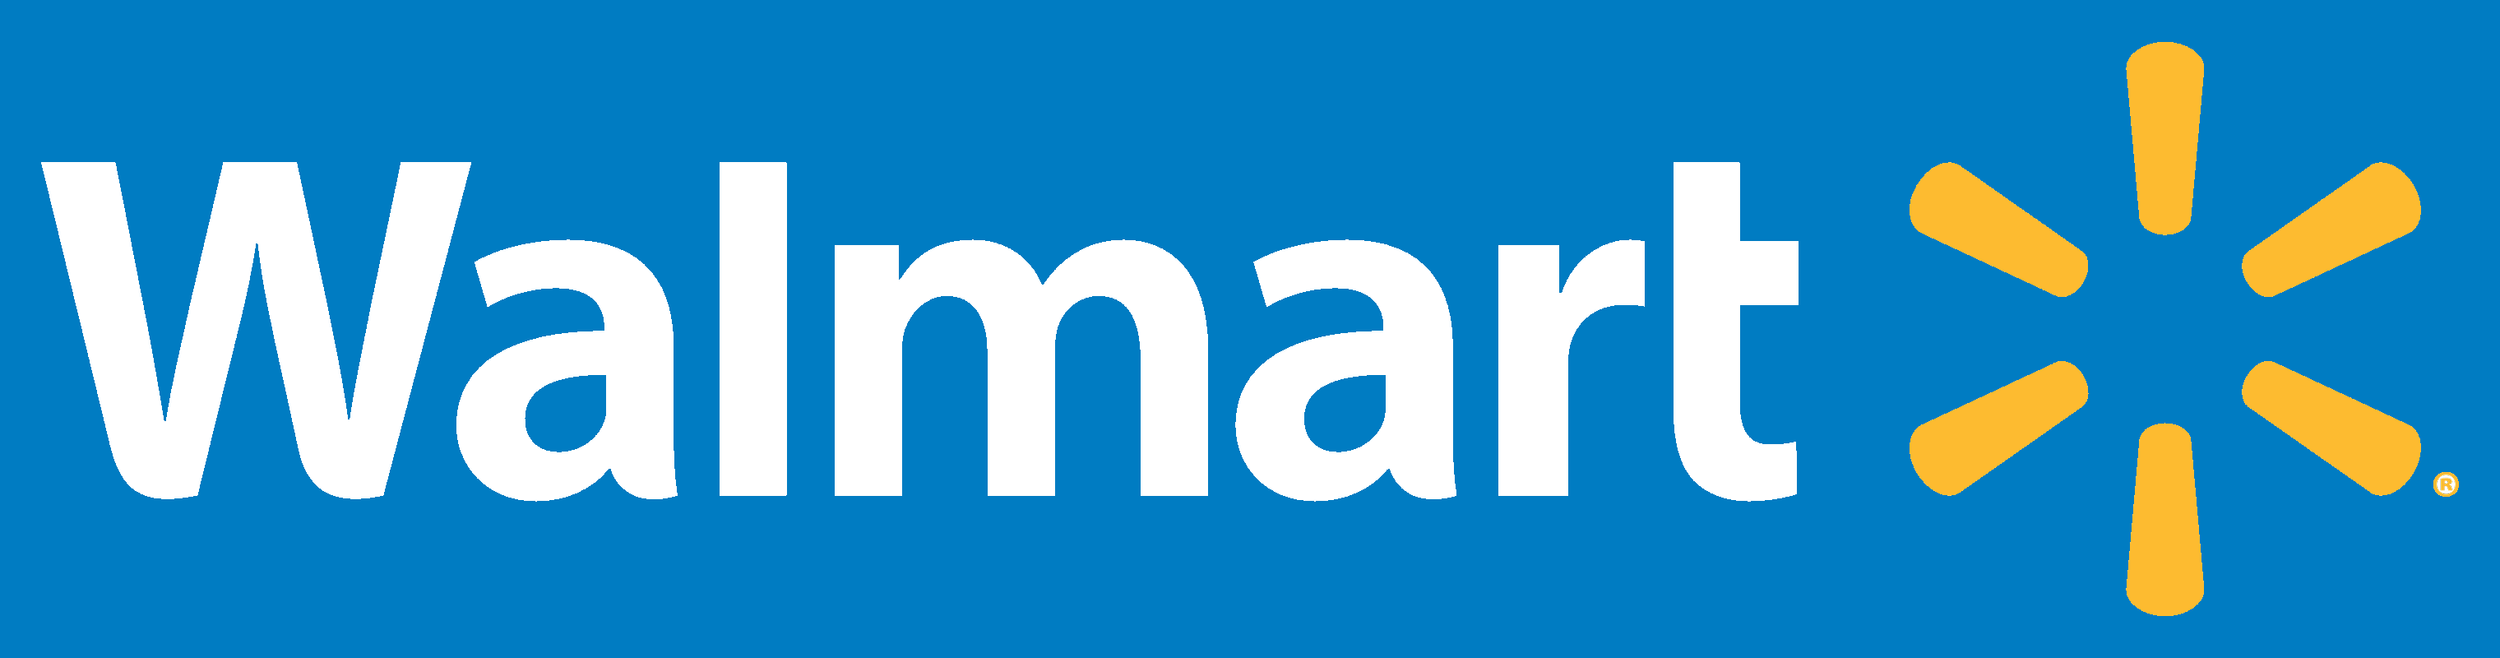 Walmart_logo_transparent_png_blue.png